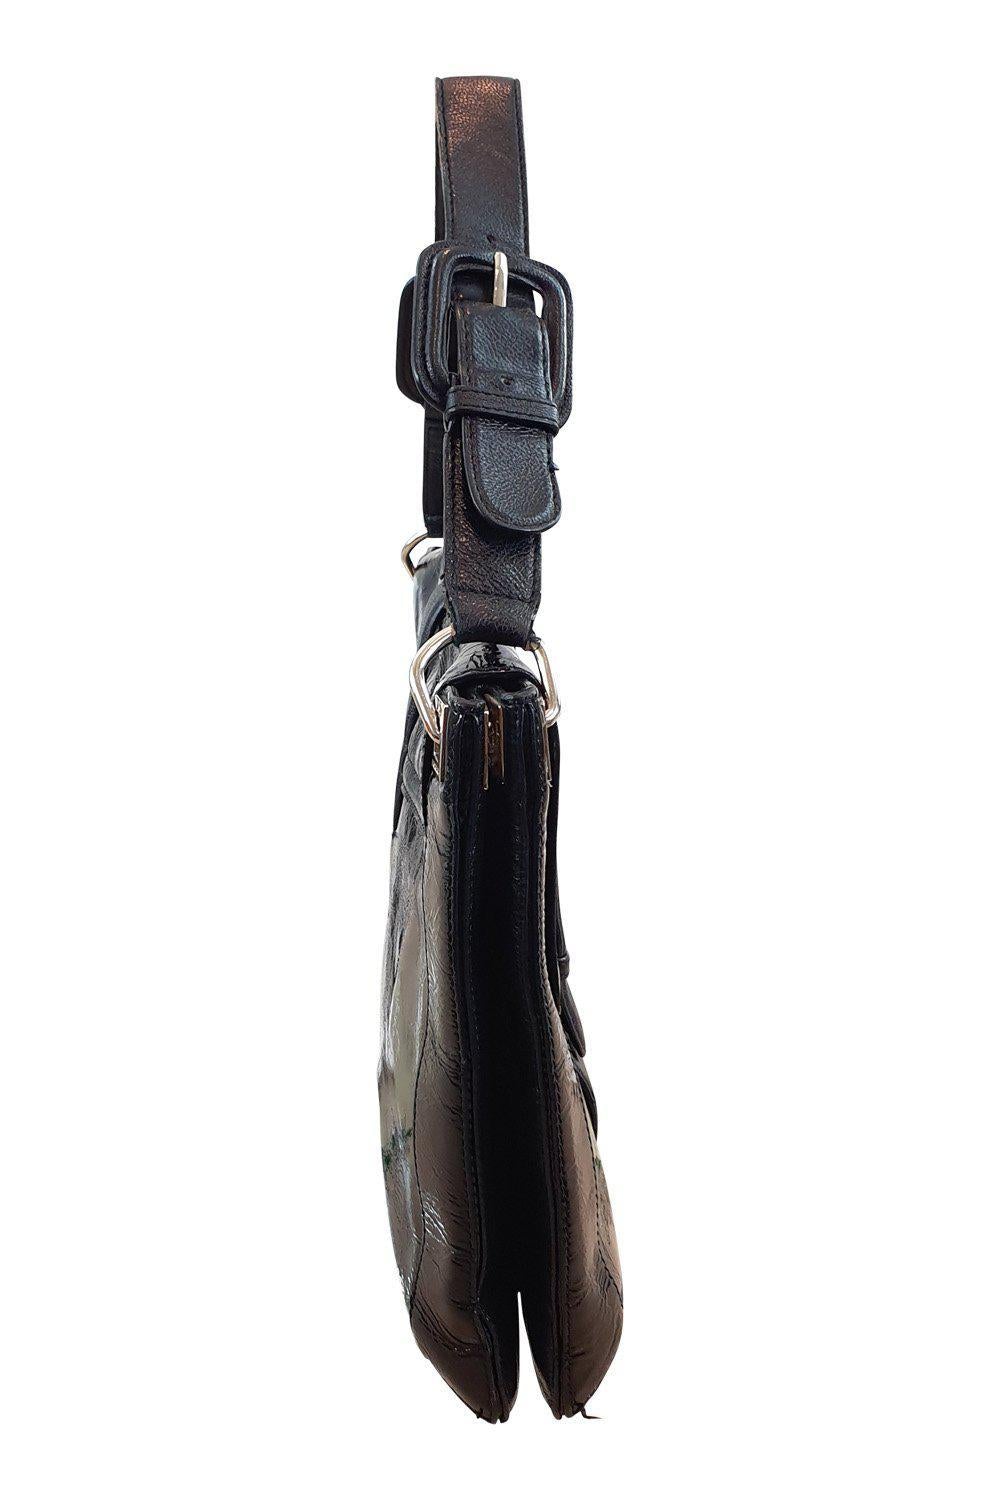 ANYA HINDMARCH Black Patent Leather Envelop Handbag (M)-Anya Hindmarch-The Freperie